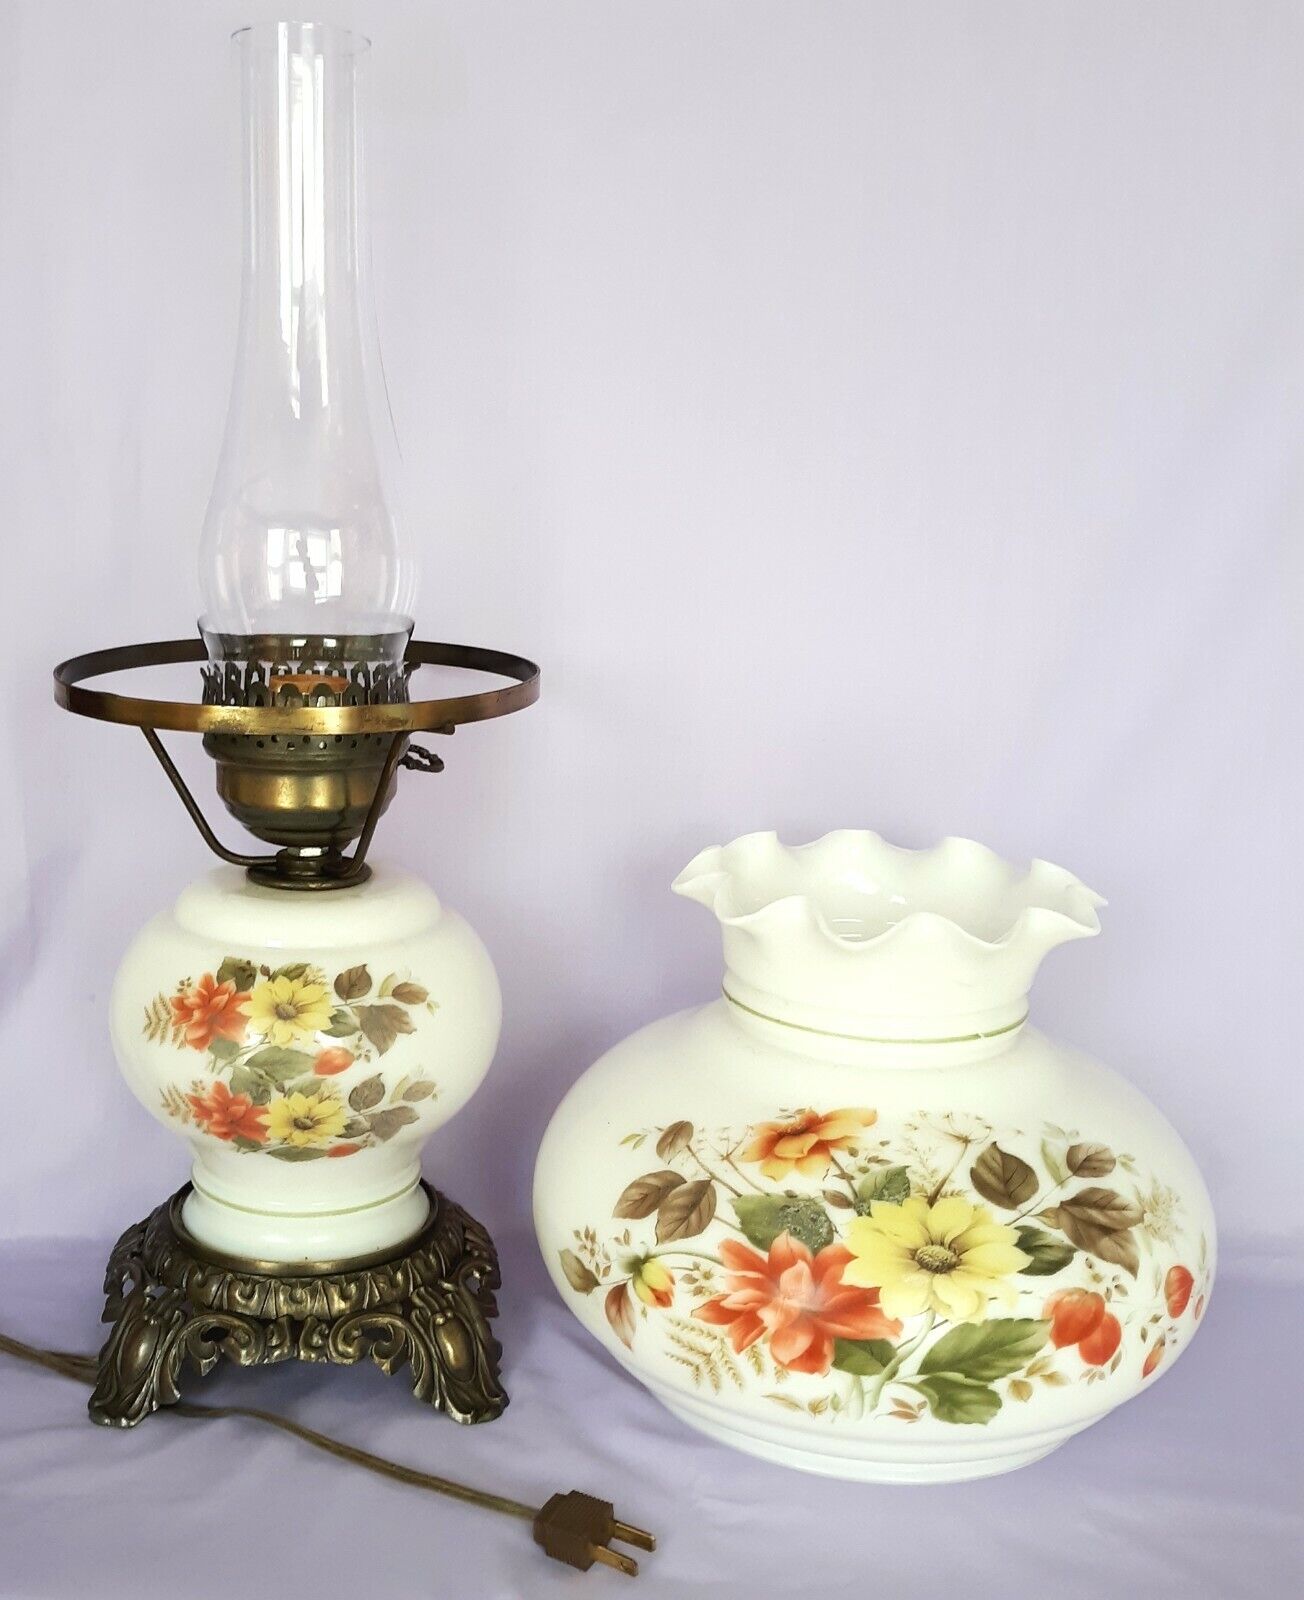 GWTW Style Lamp Milk Glass Globe Shade Painted Wild Flowers 3 Way w/Chimney VTG